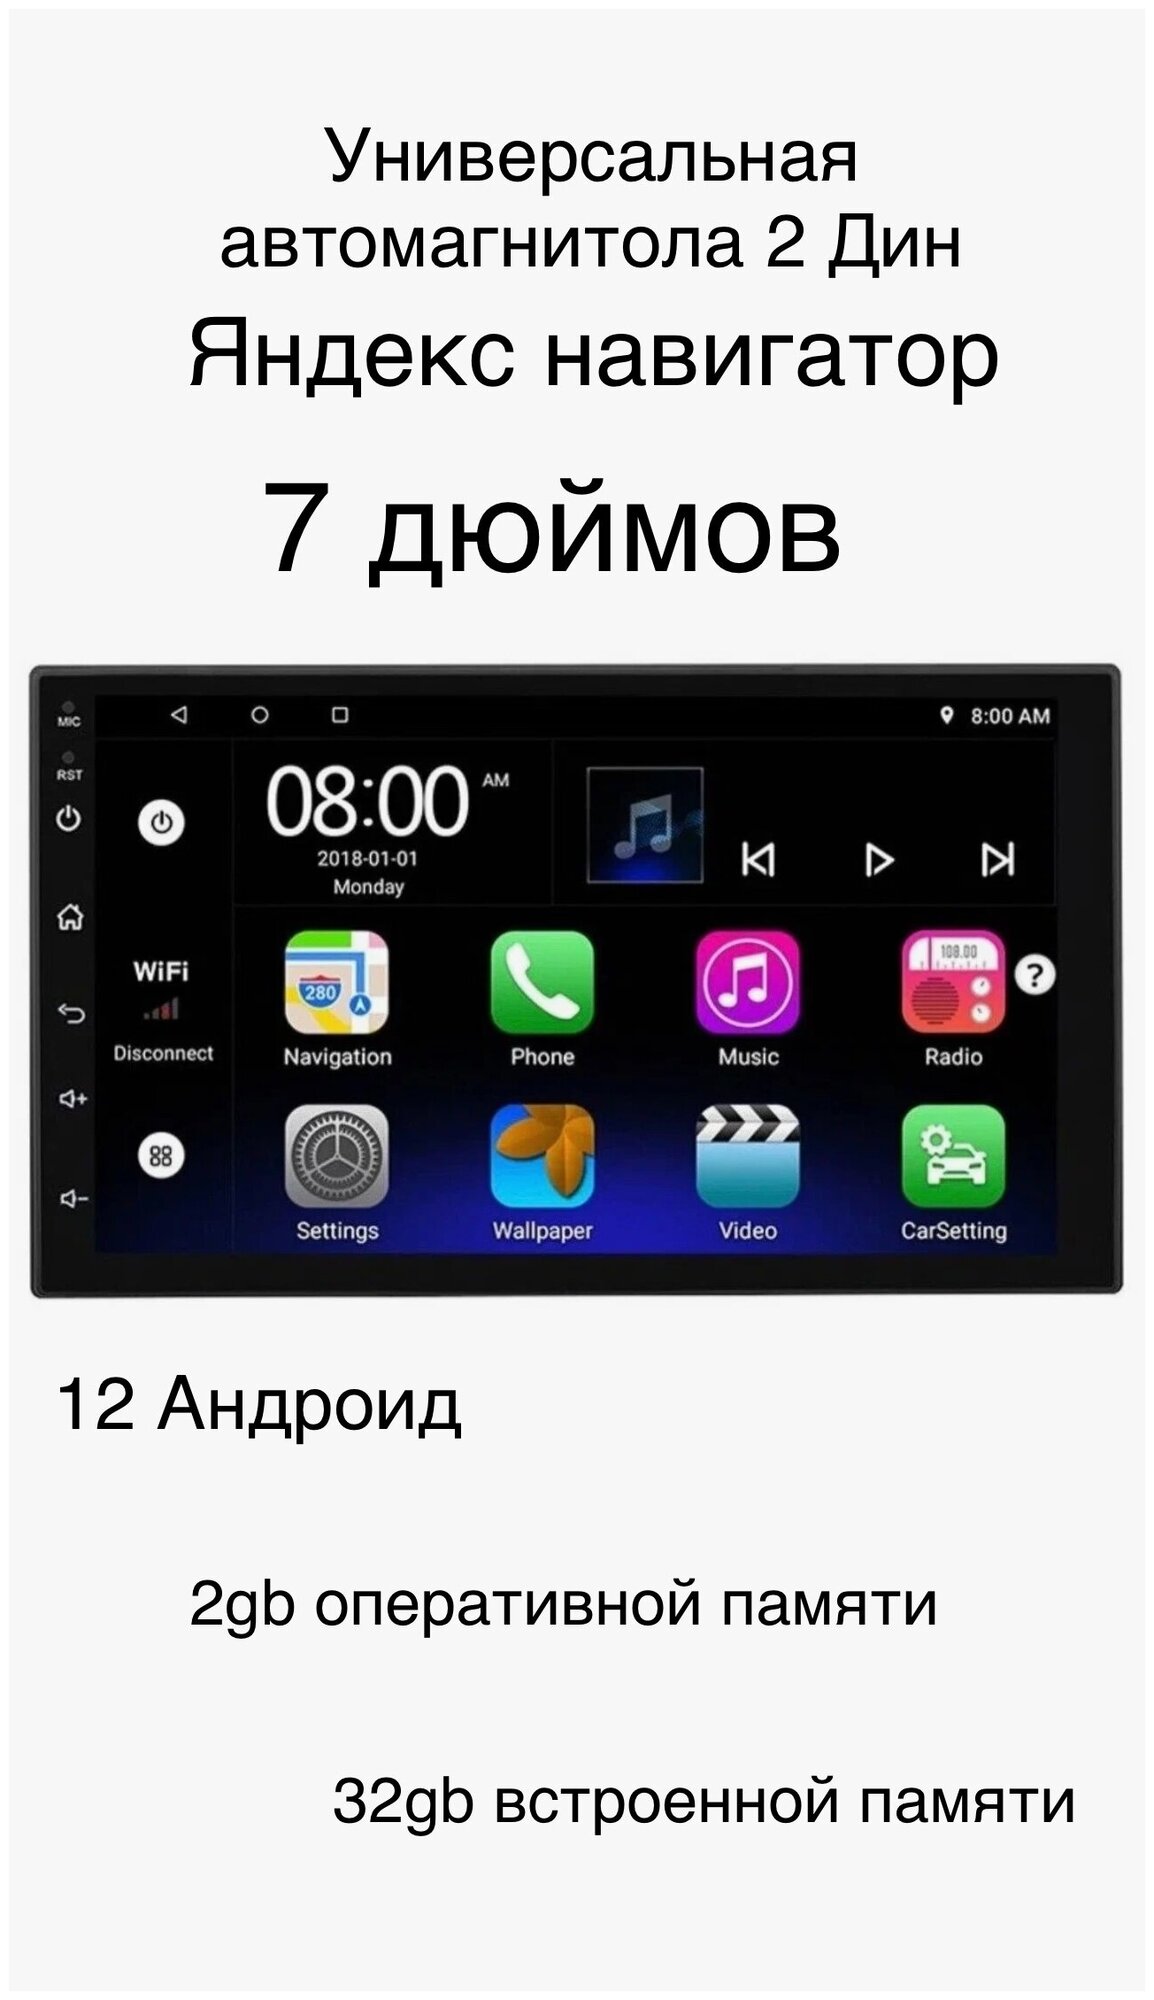 Автомагнитола / Автомагнитола 2 дин / Автомагнитола с экраном / Автомагнитола андроид 2/32 7 дюймов / GPS / Wi-Fi / Яндекс навигатор